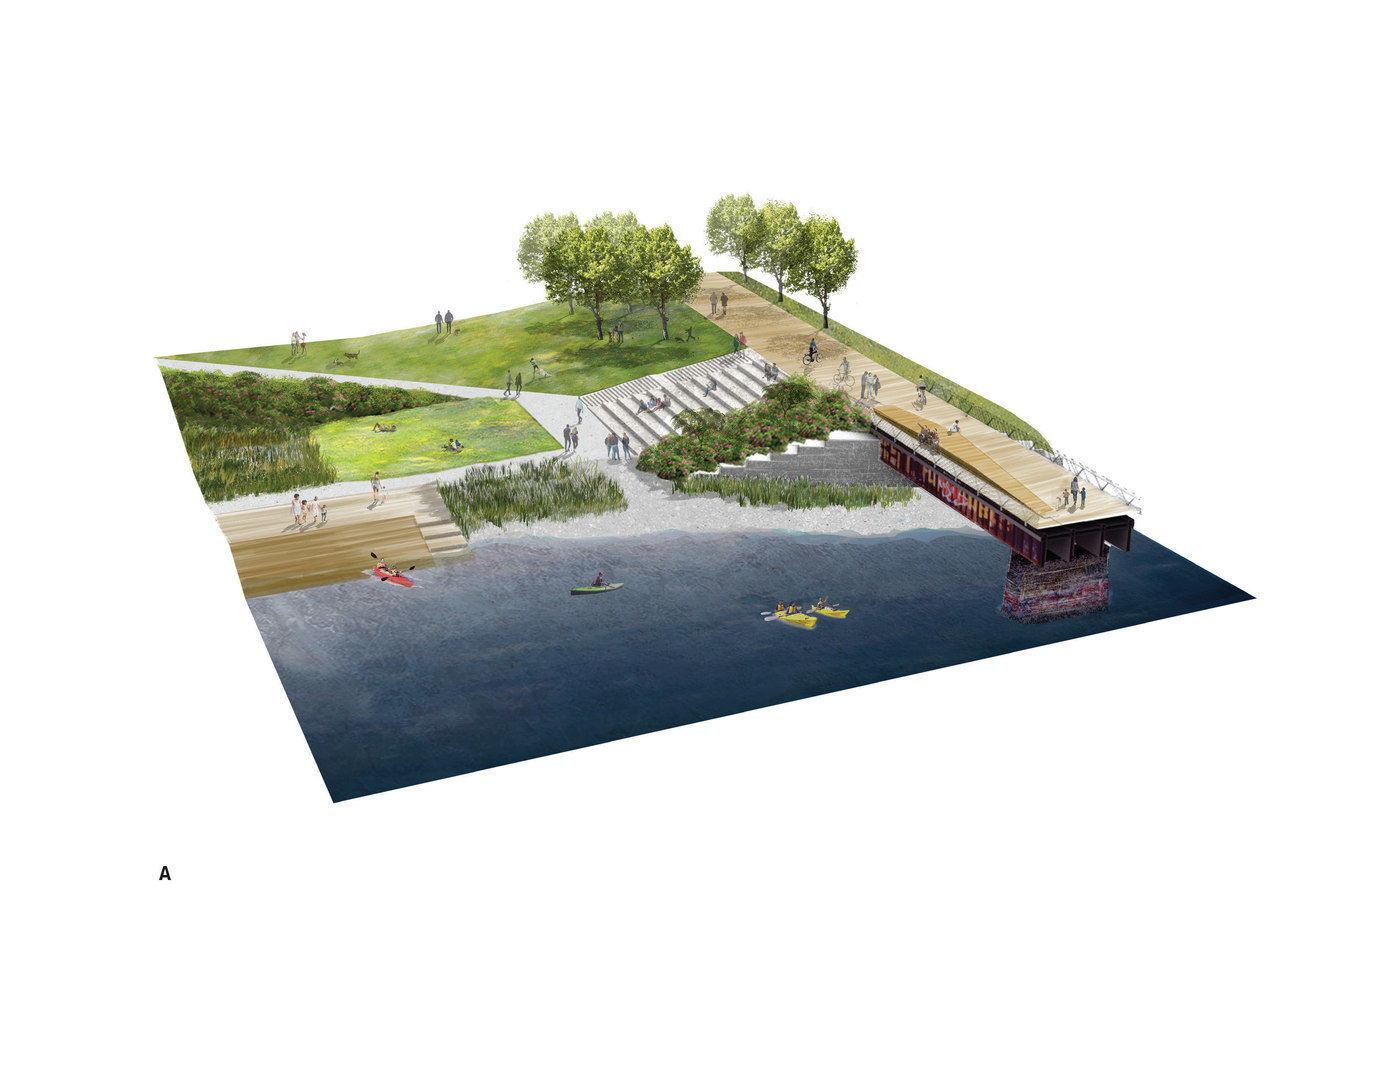 6 tskp unbuilt stuckbridge park providence aiact rendering 1400 0x0x3300x2550 q85